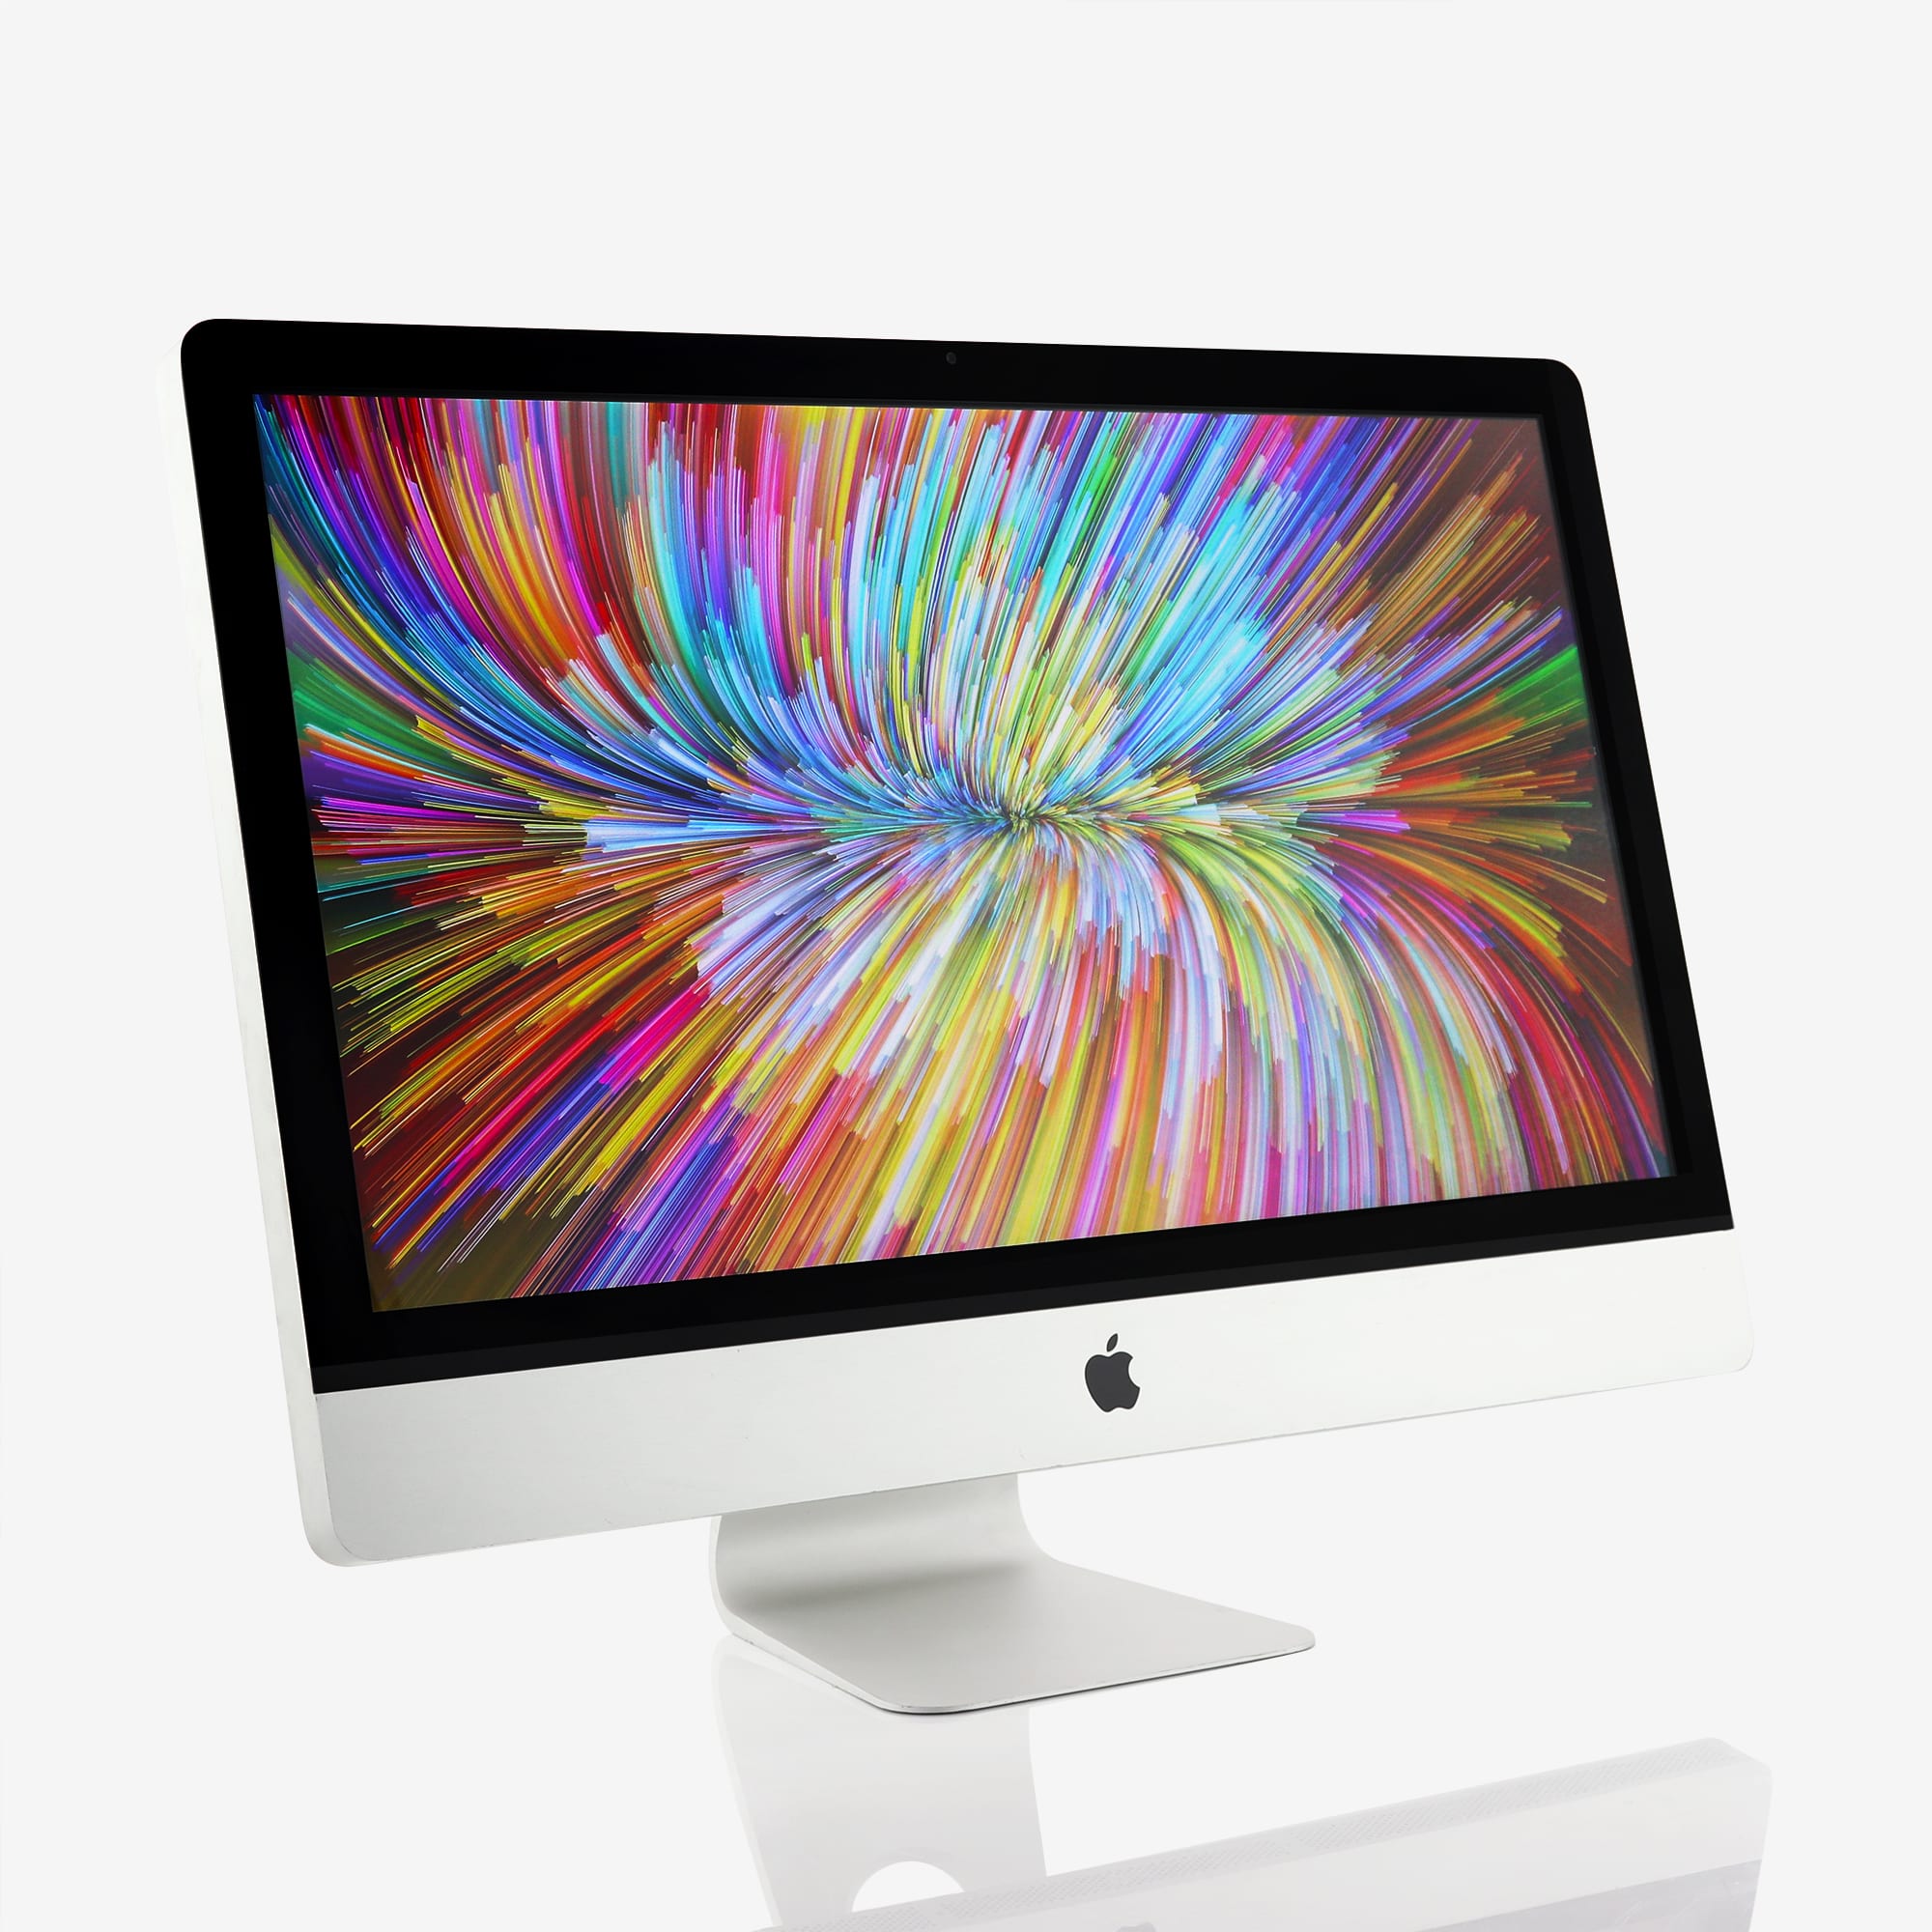 Apple iMac 27 Inch QuadCore i7 2.93 GHz (2010) MacFinder Certified